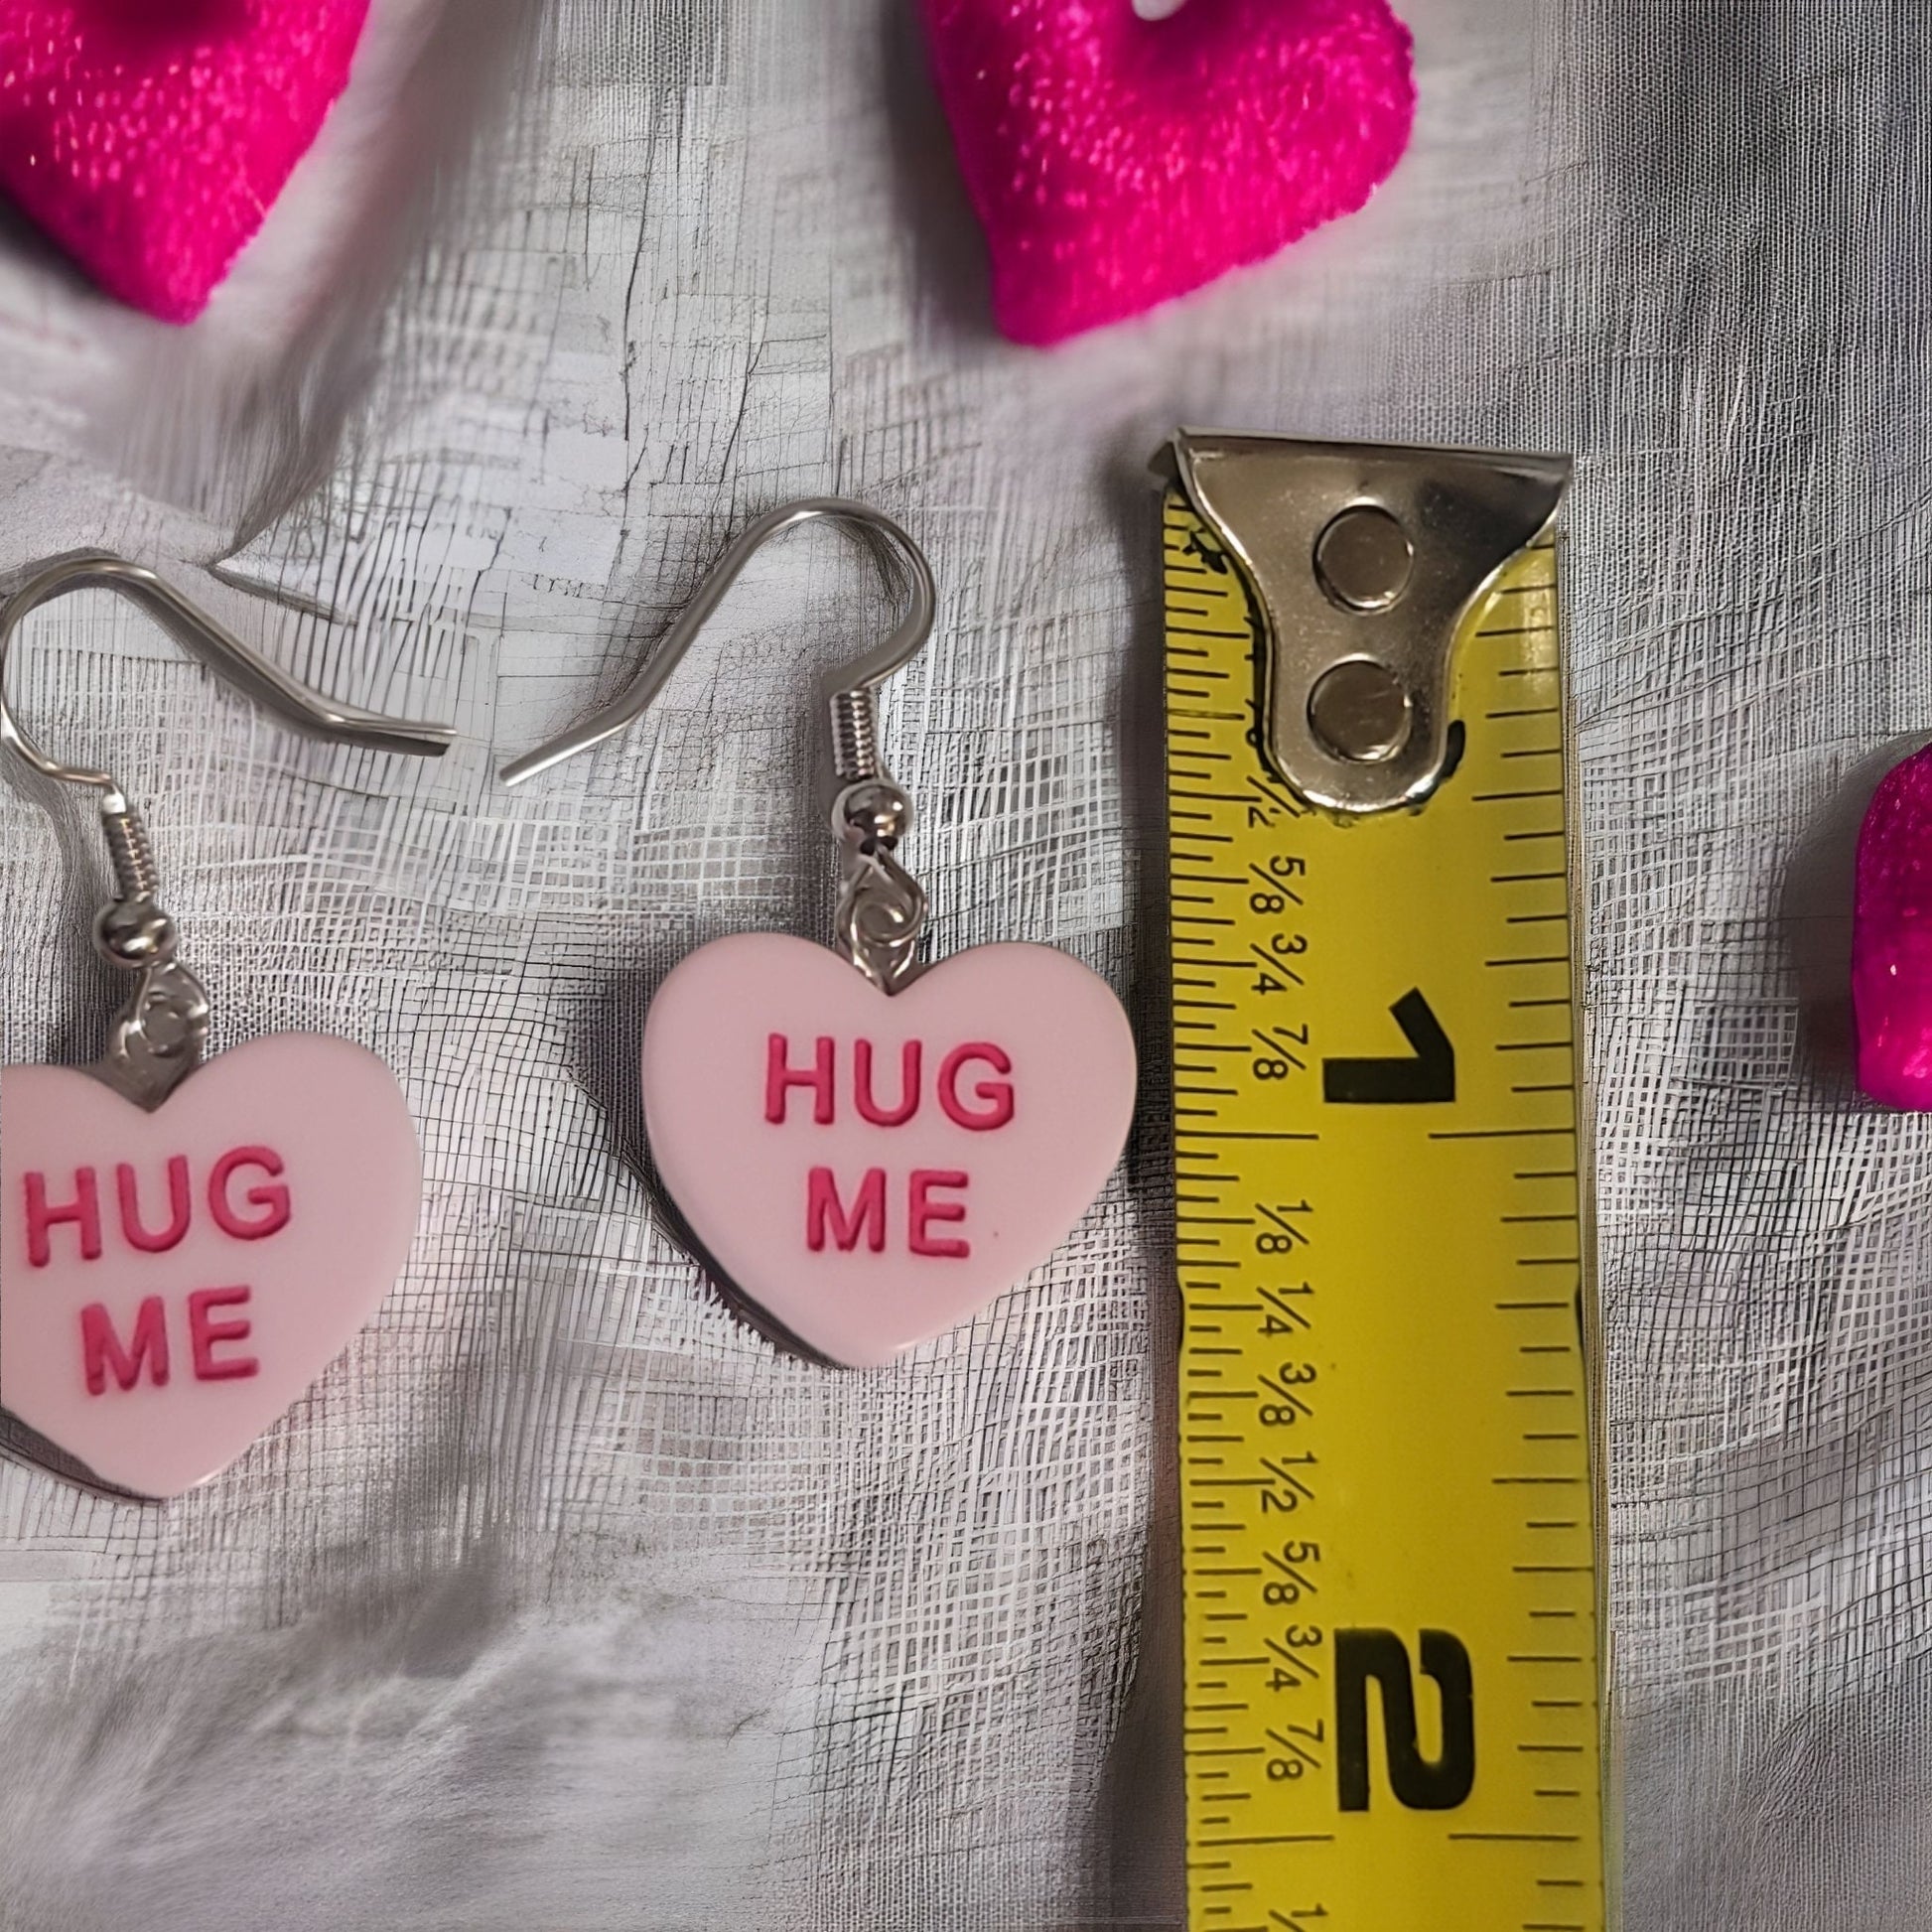 Hug me heart dangle hook earrings valentine candy earrings